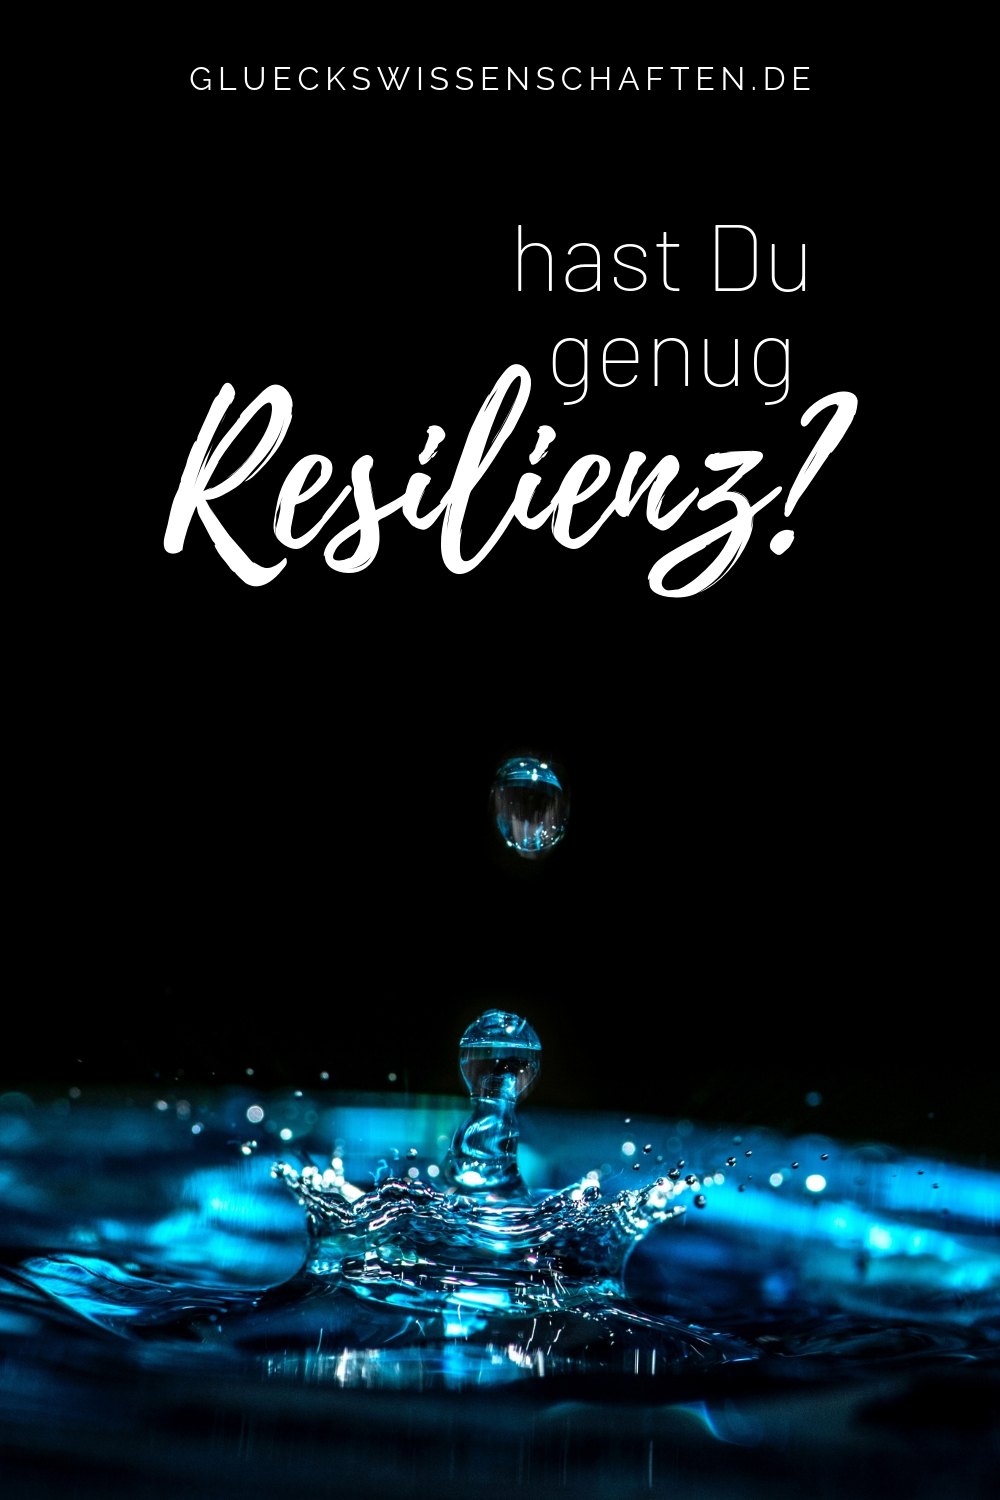 Hast Du genug Resilienz?